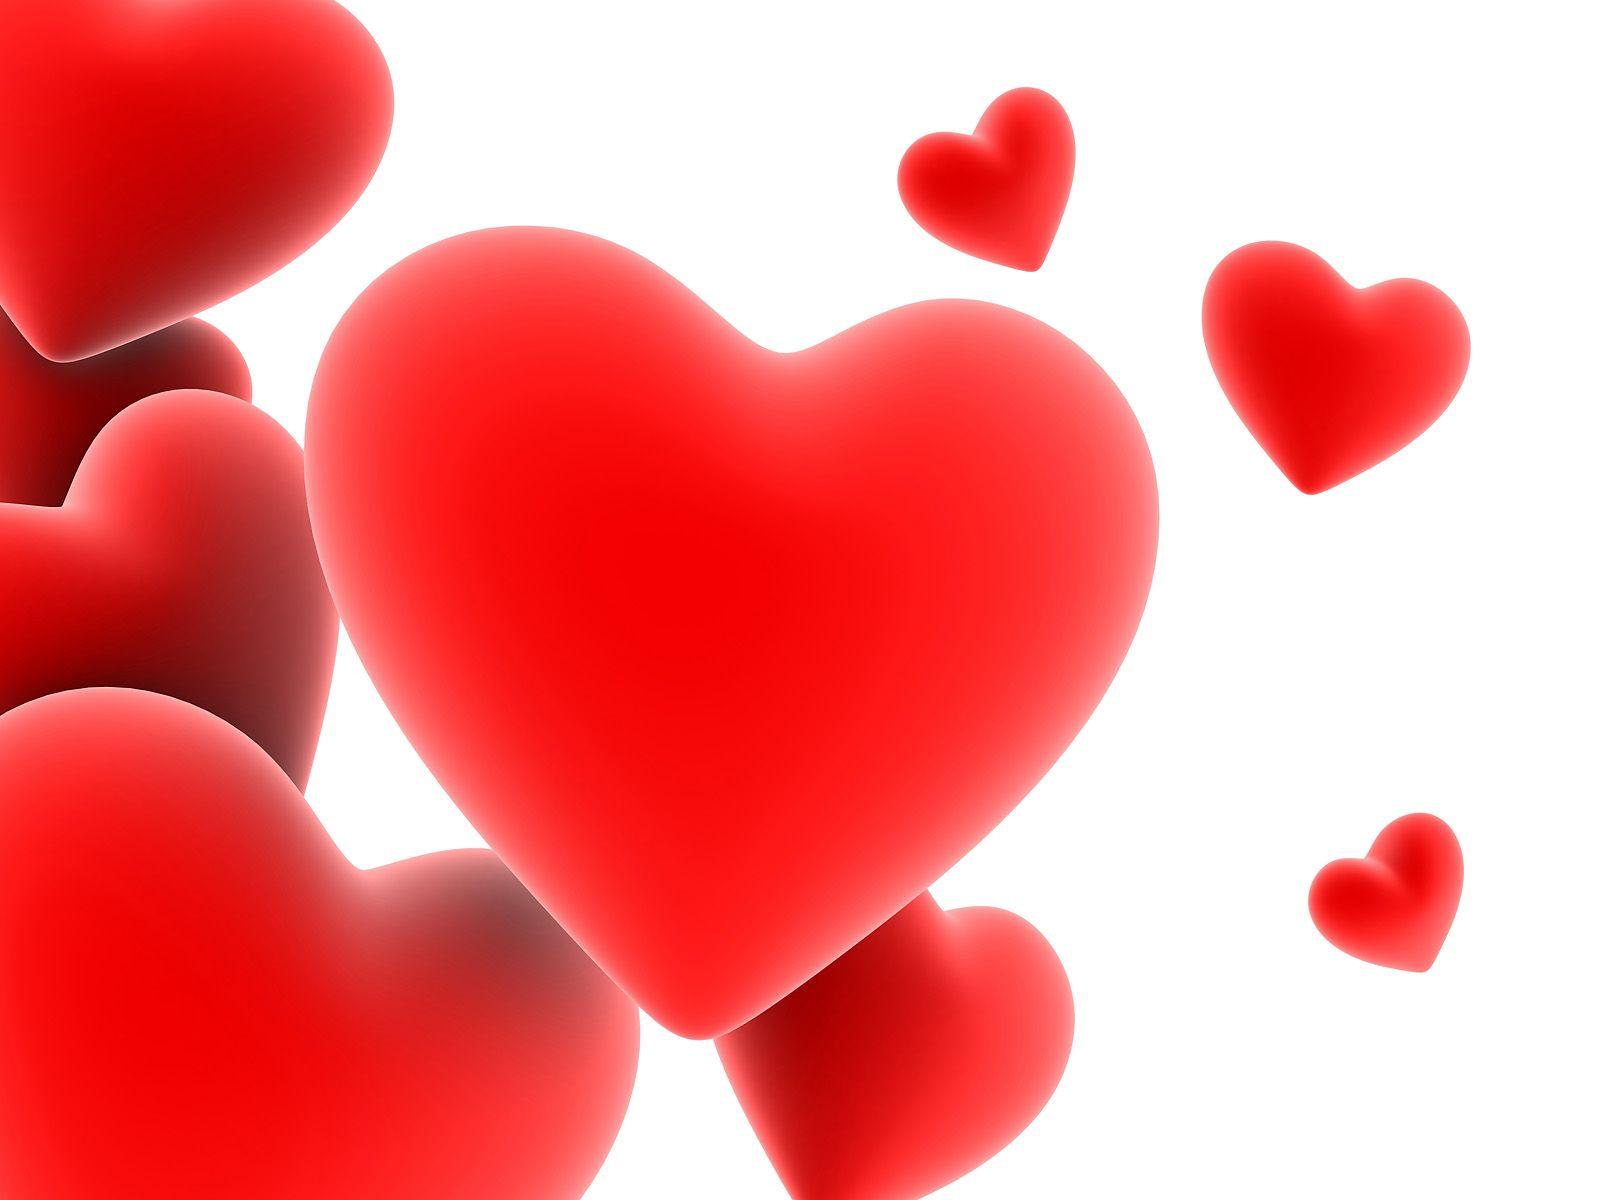 HD Red Hearts Image Desktop Wallpaper